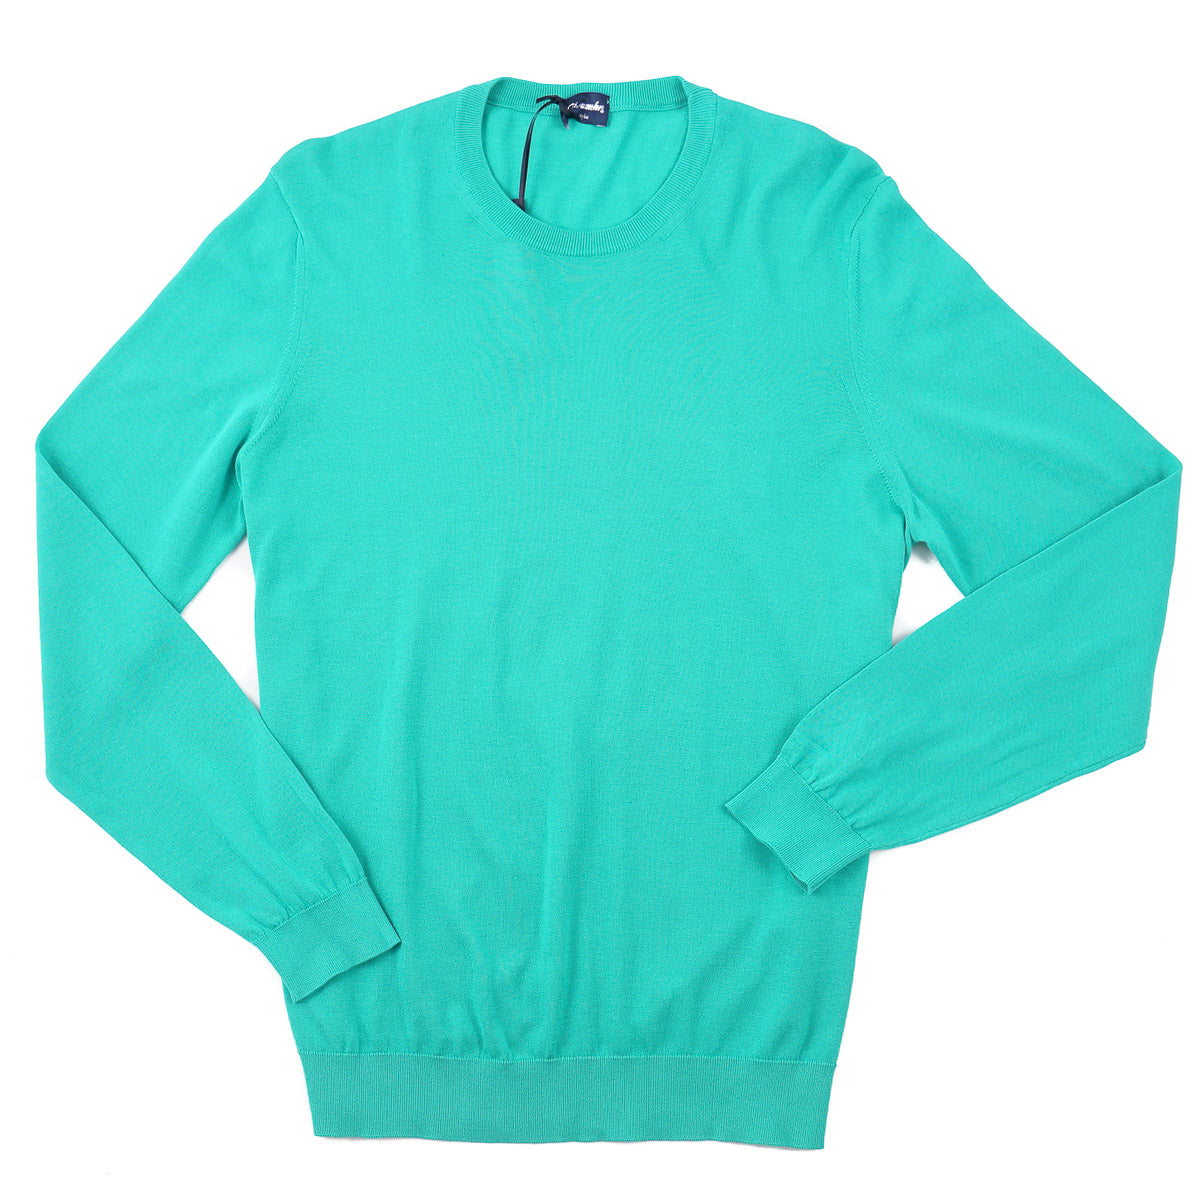 Drumohr Superfine Light Cotton Sweater - Top Shelf Apparel